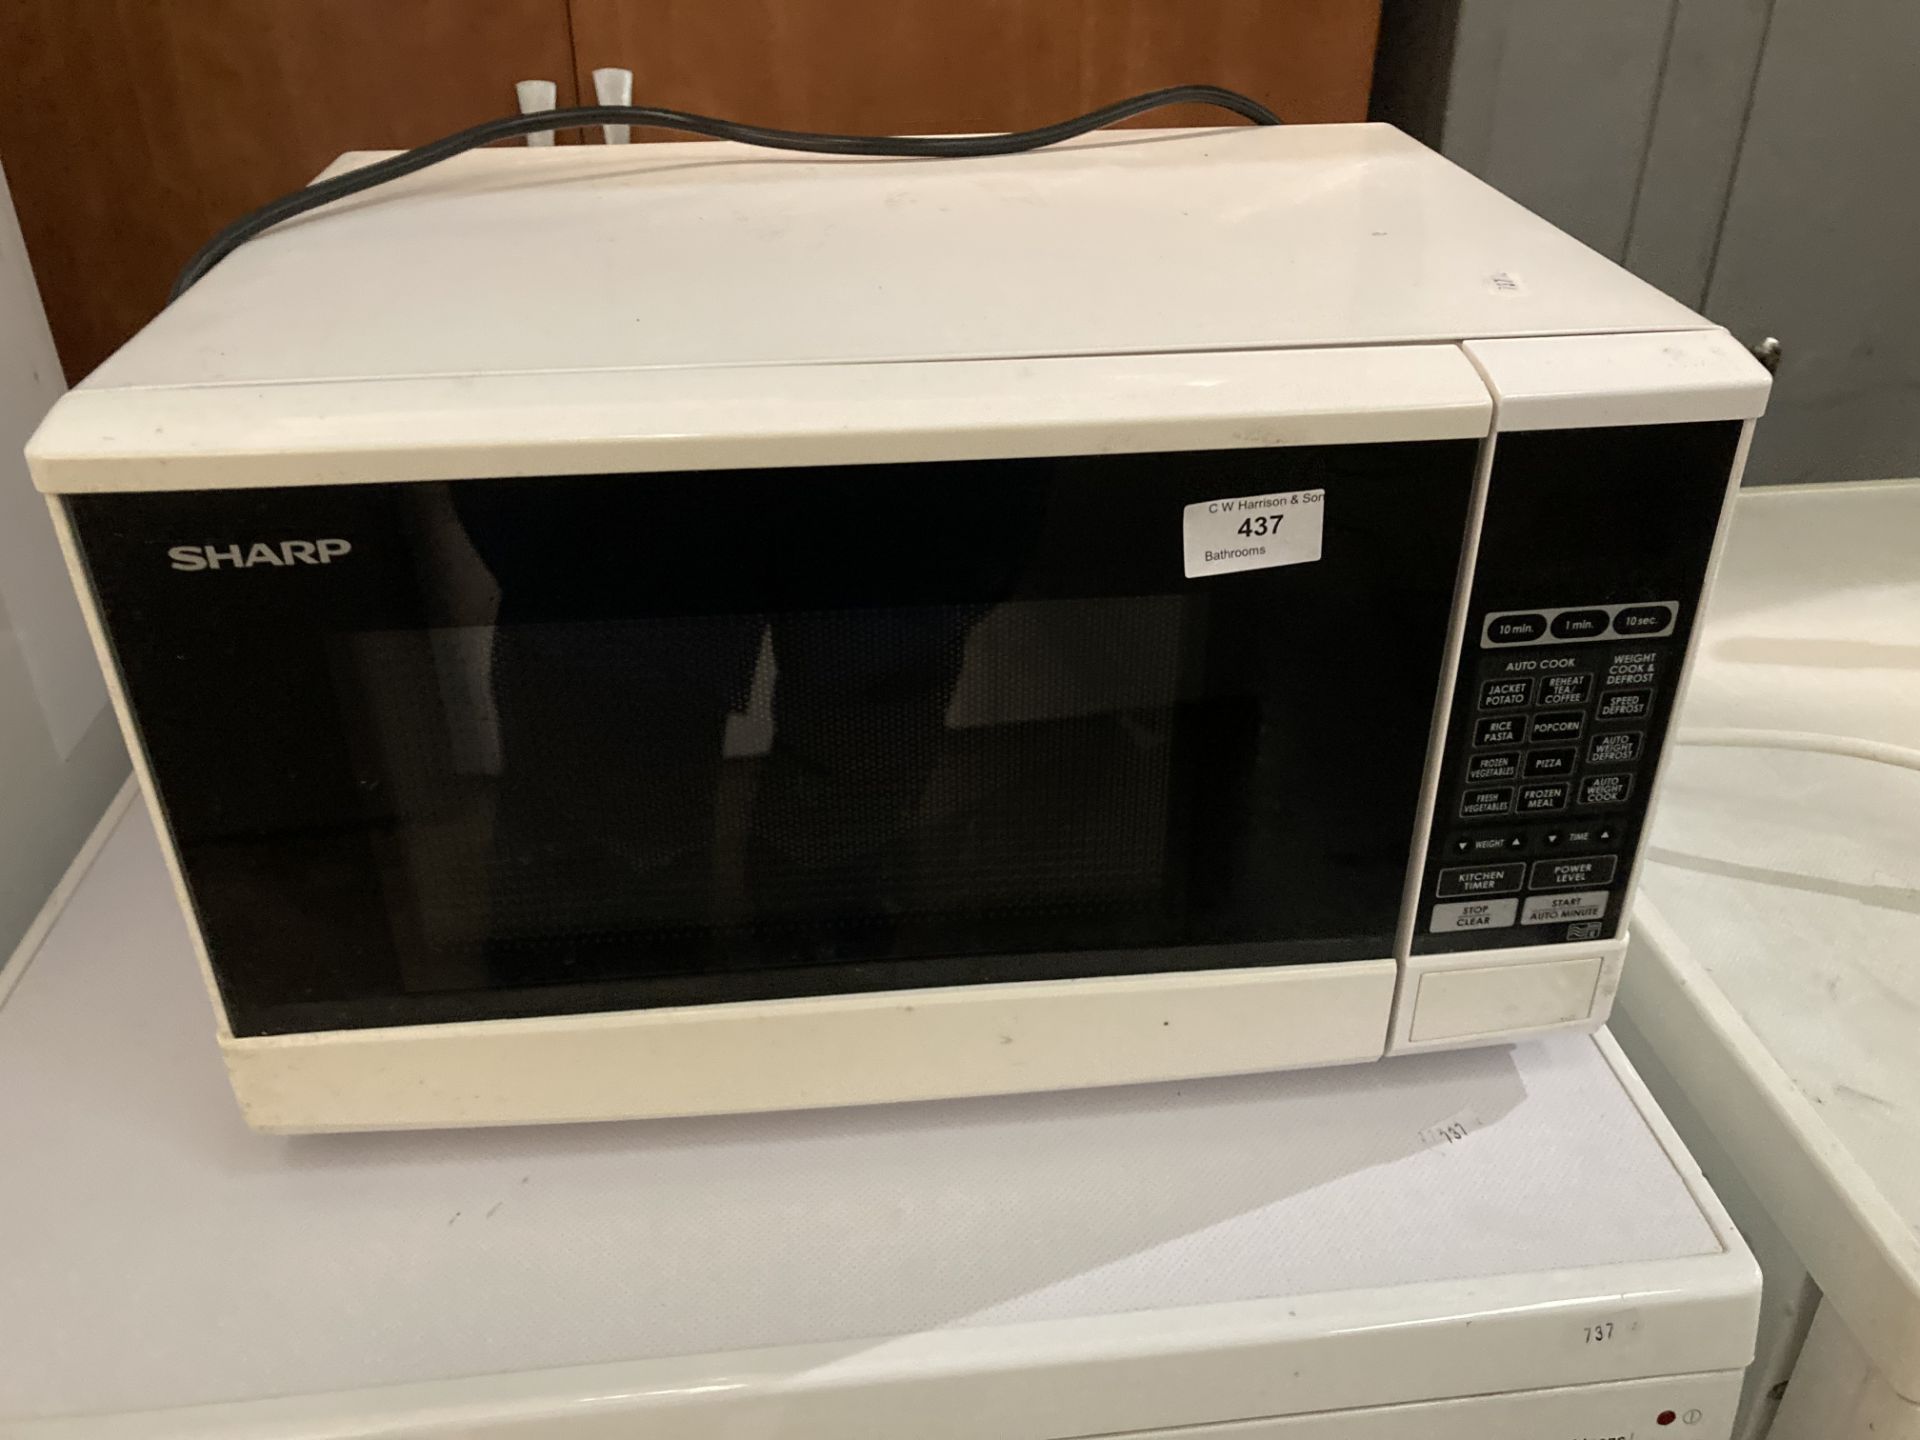 Sharp microwave oven (saleroom location: PO)